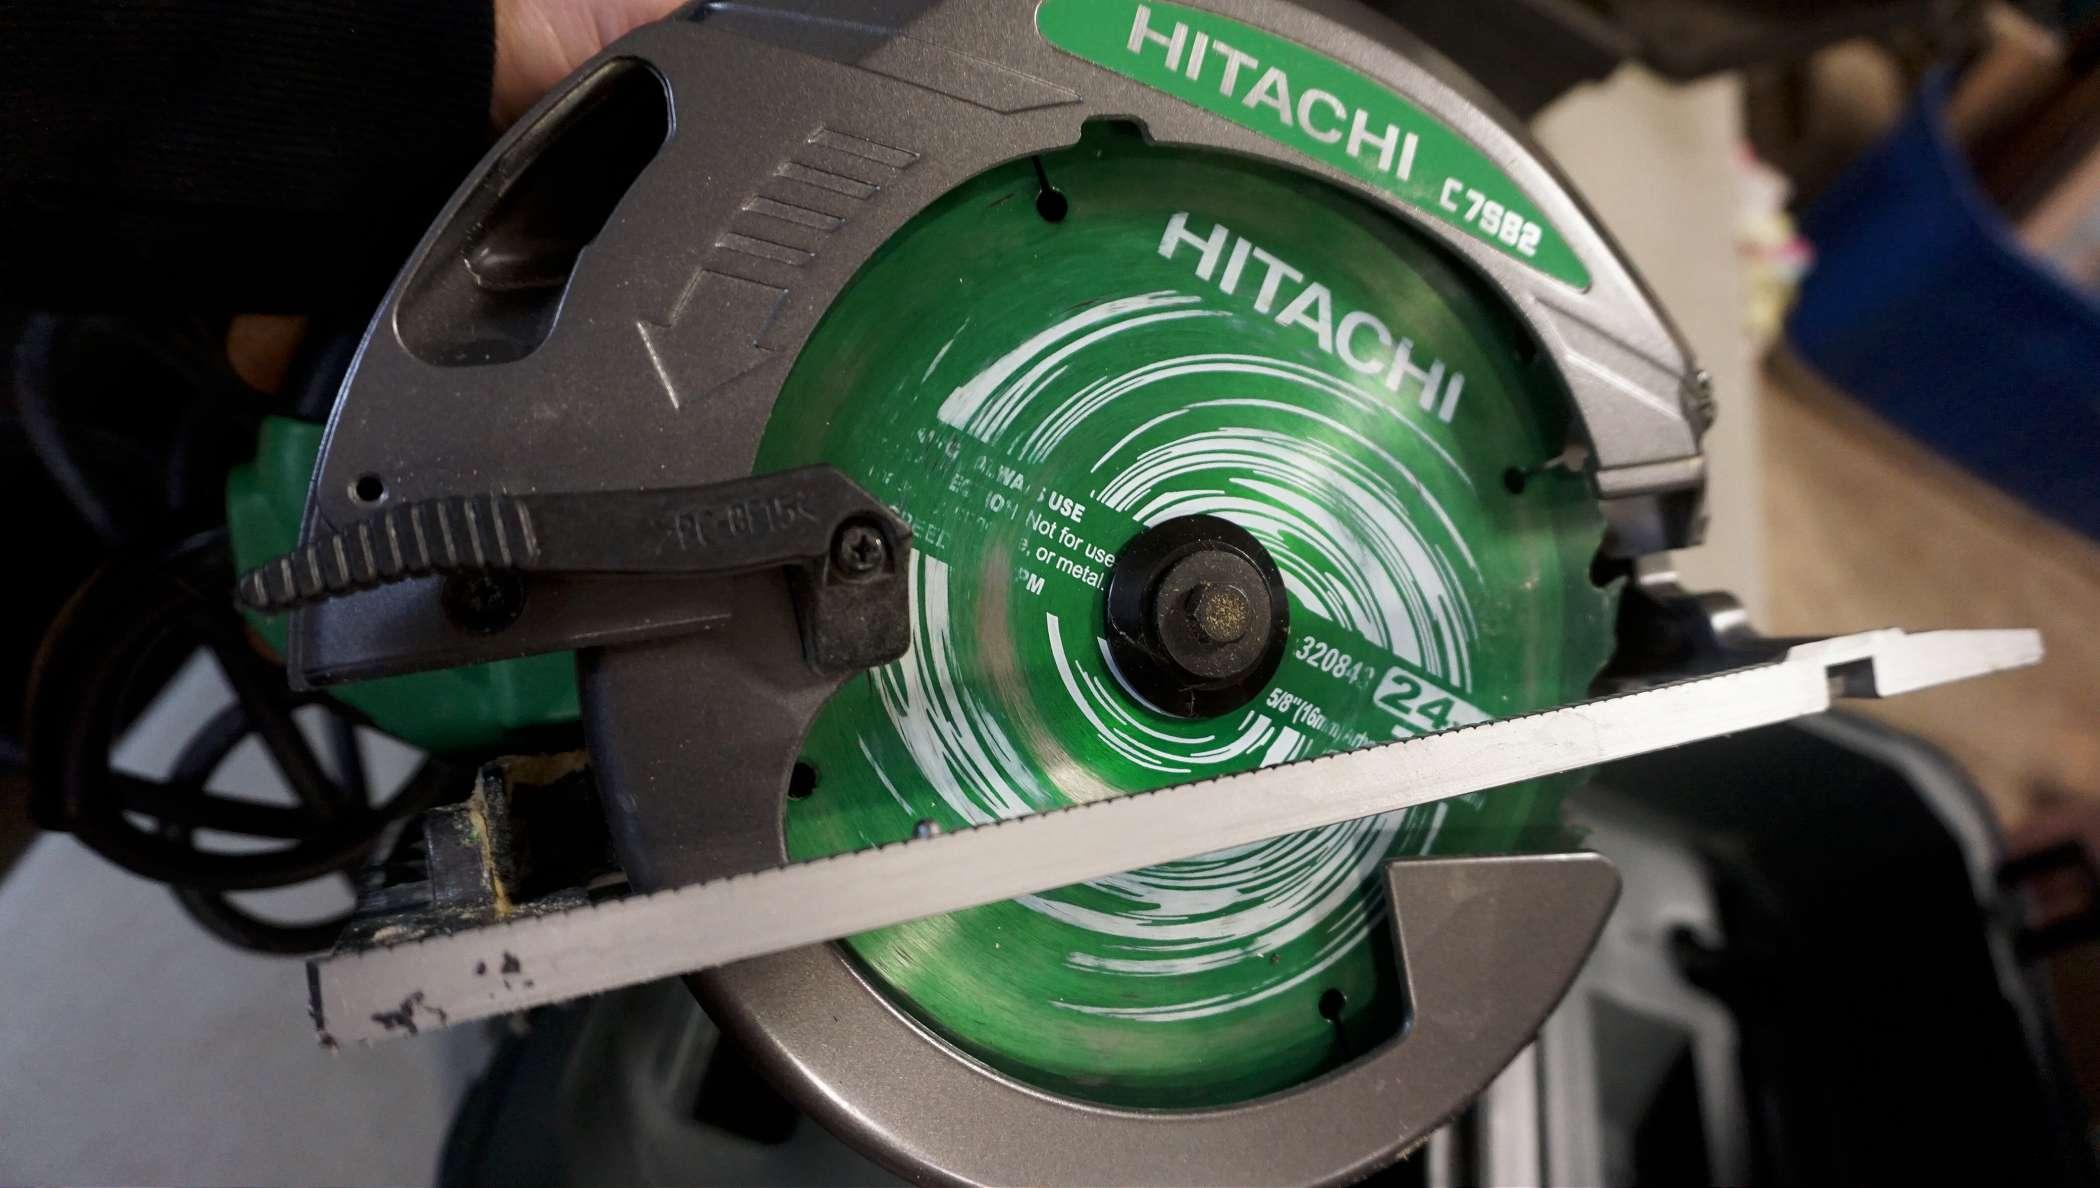 Hitachi C7582 Saw w/ Hard Case